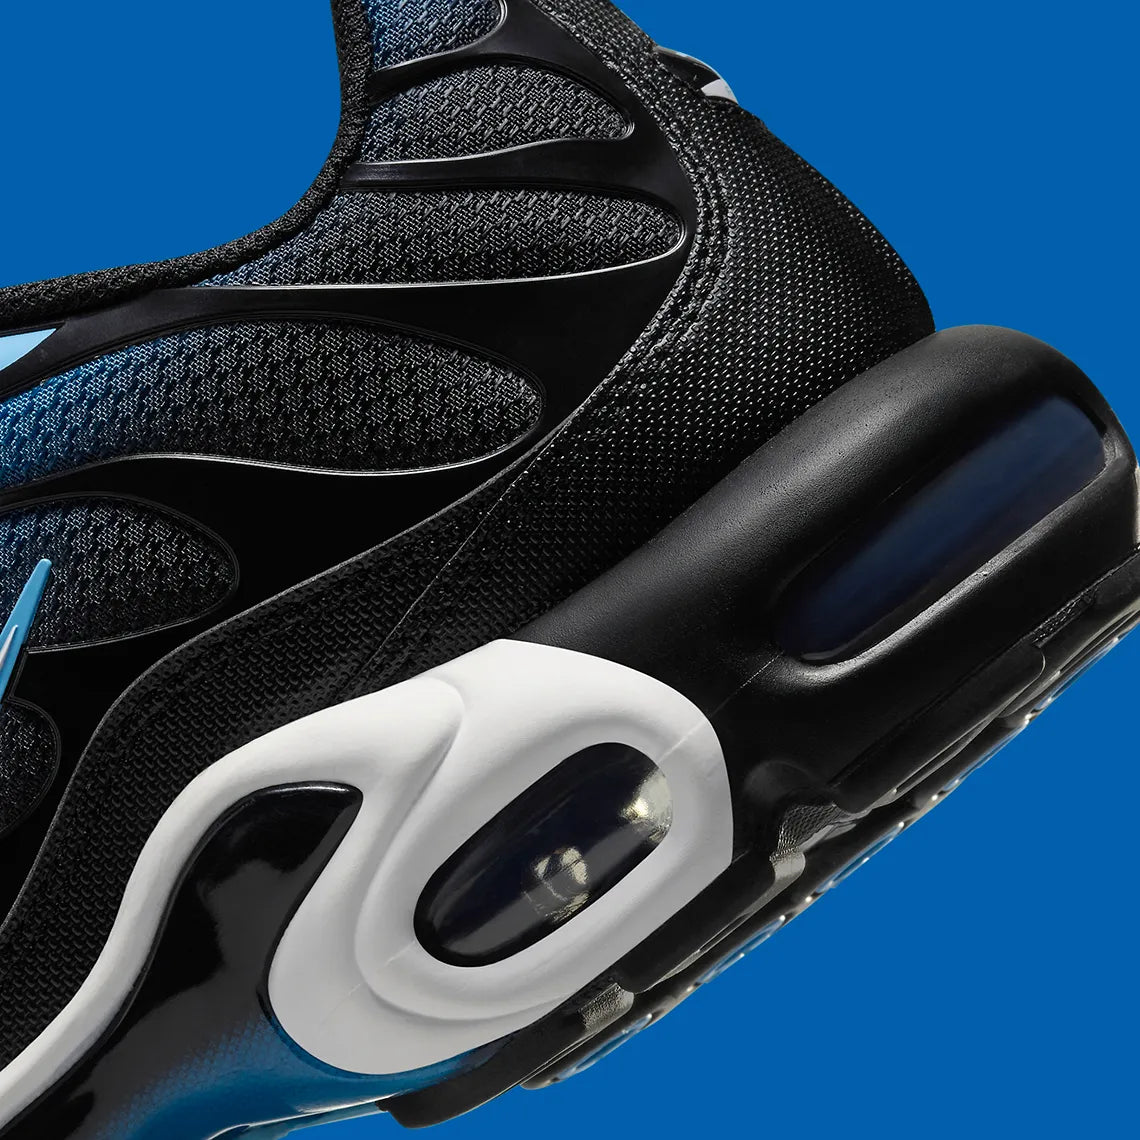 Nike Air Max Plus Aquarius Blue